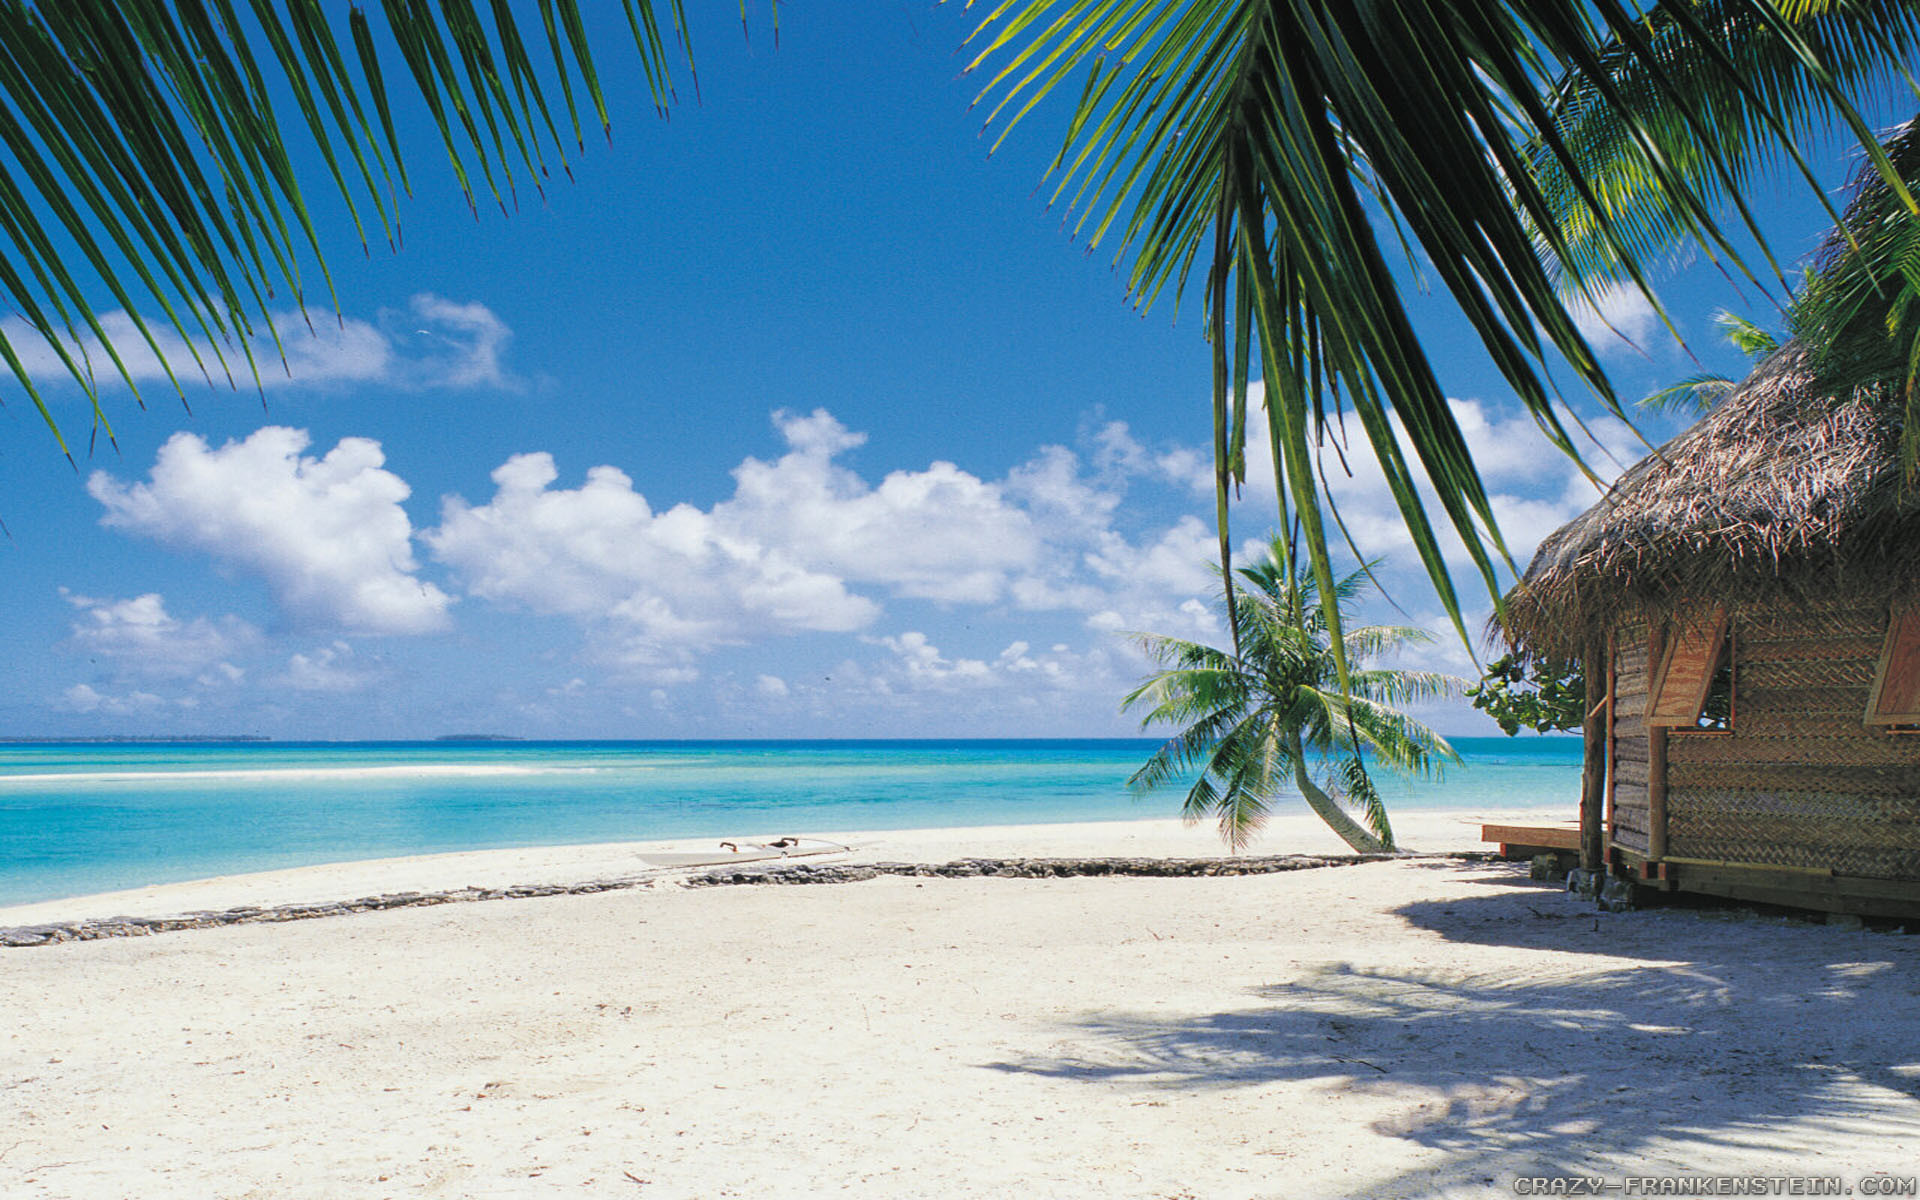 sfondo del desktop estivo gratuito,albero,spiaggia,caraibico,vacanza,palma